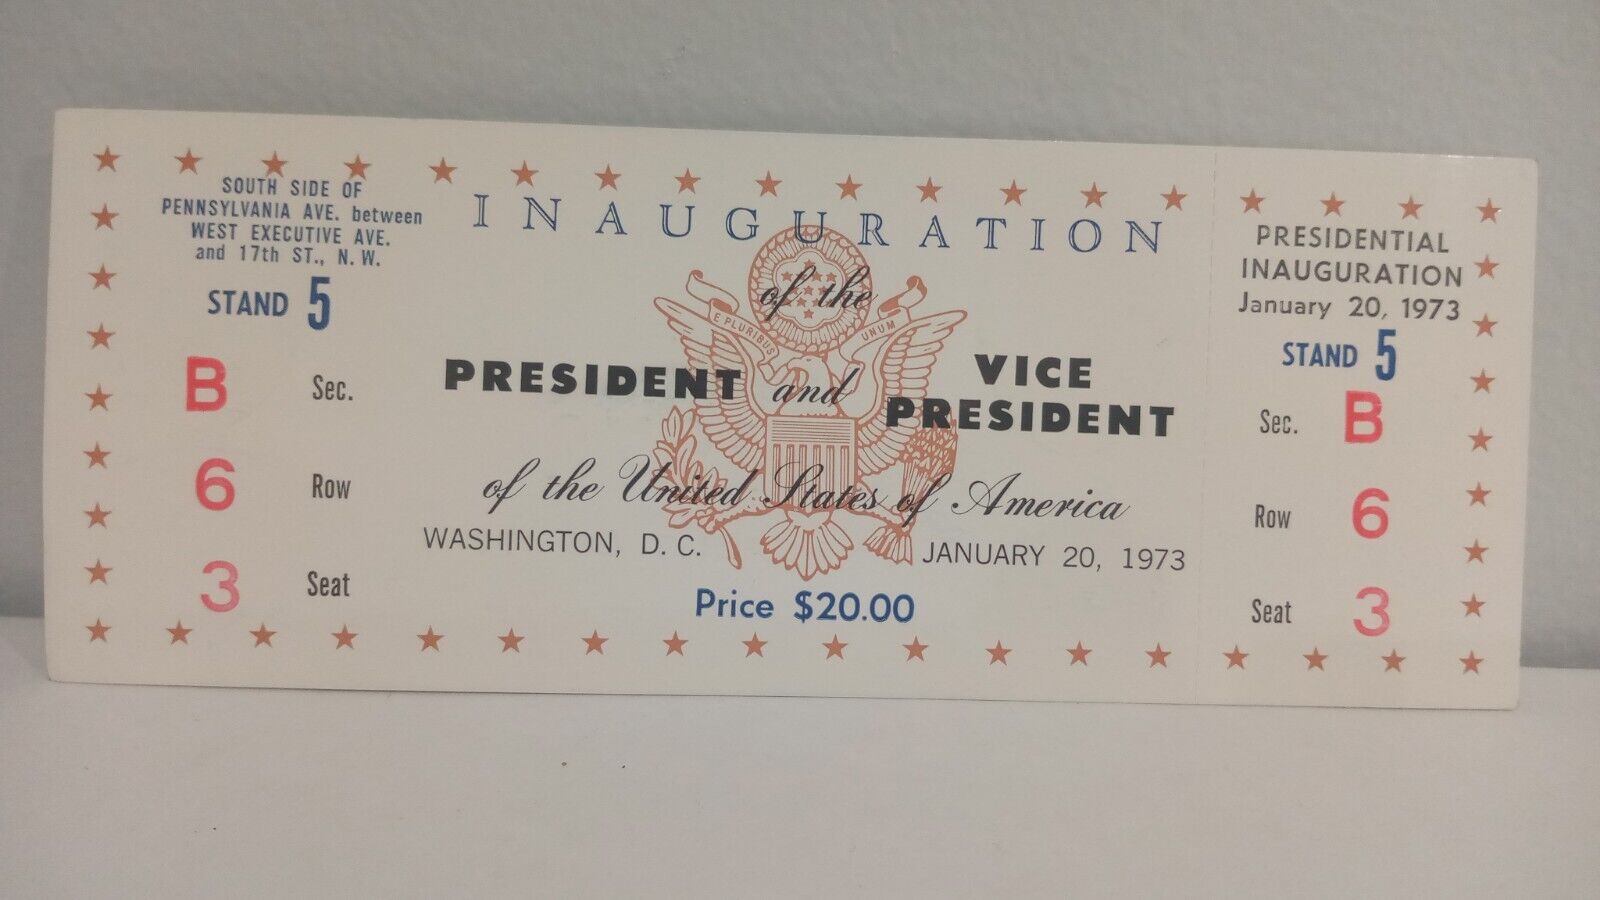 1973 President Richard Nixon Inauguration Full Ticket $20 Stand 5, Row 6, Seat 3